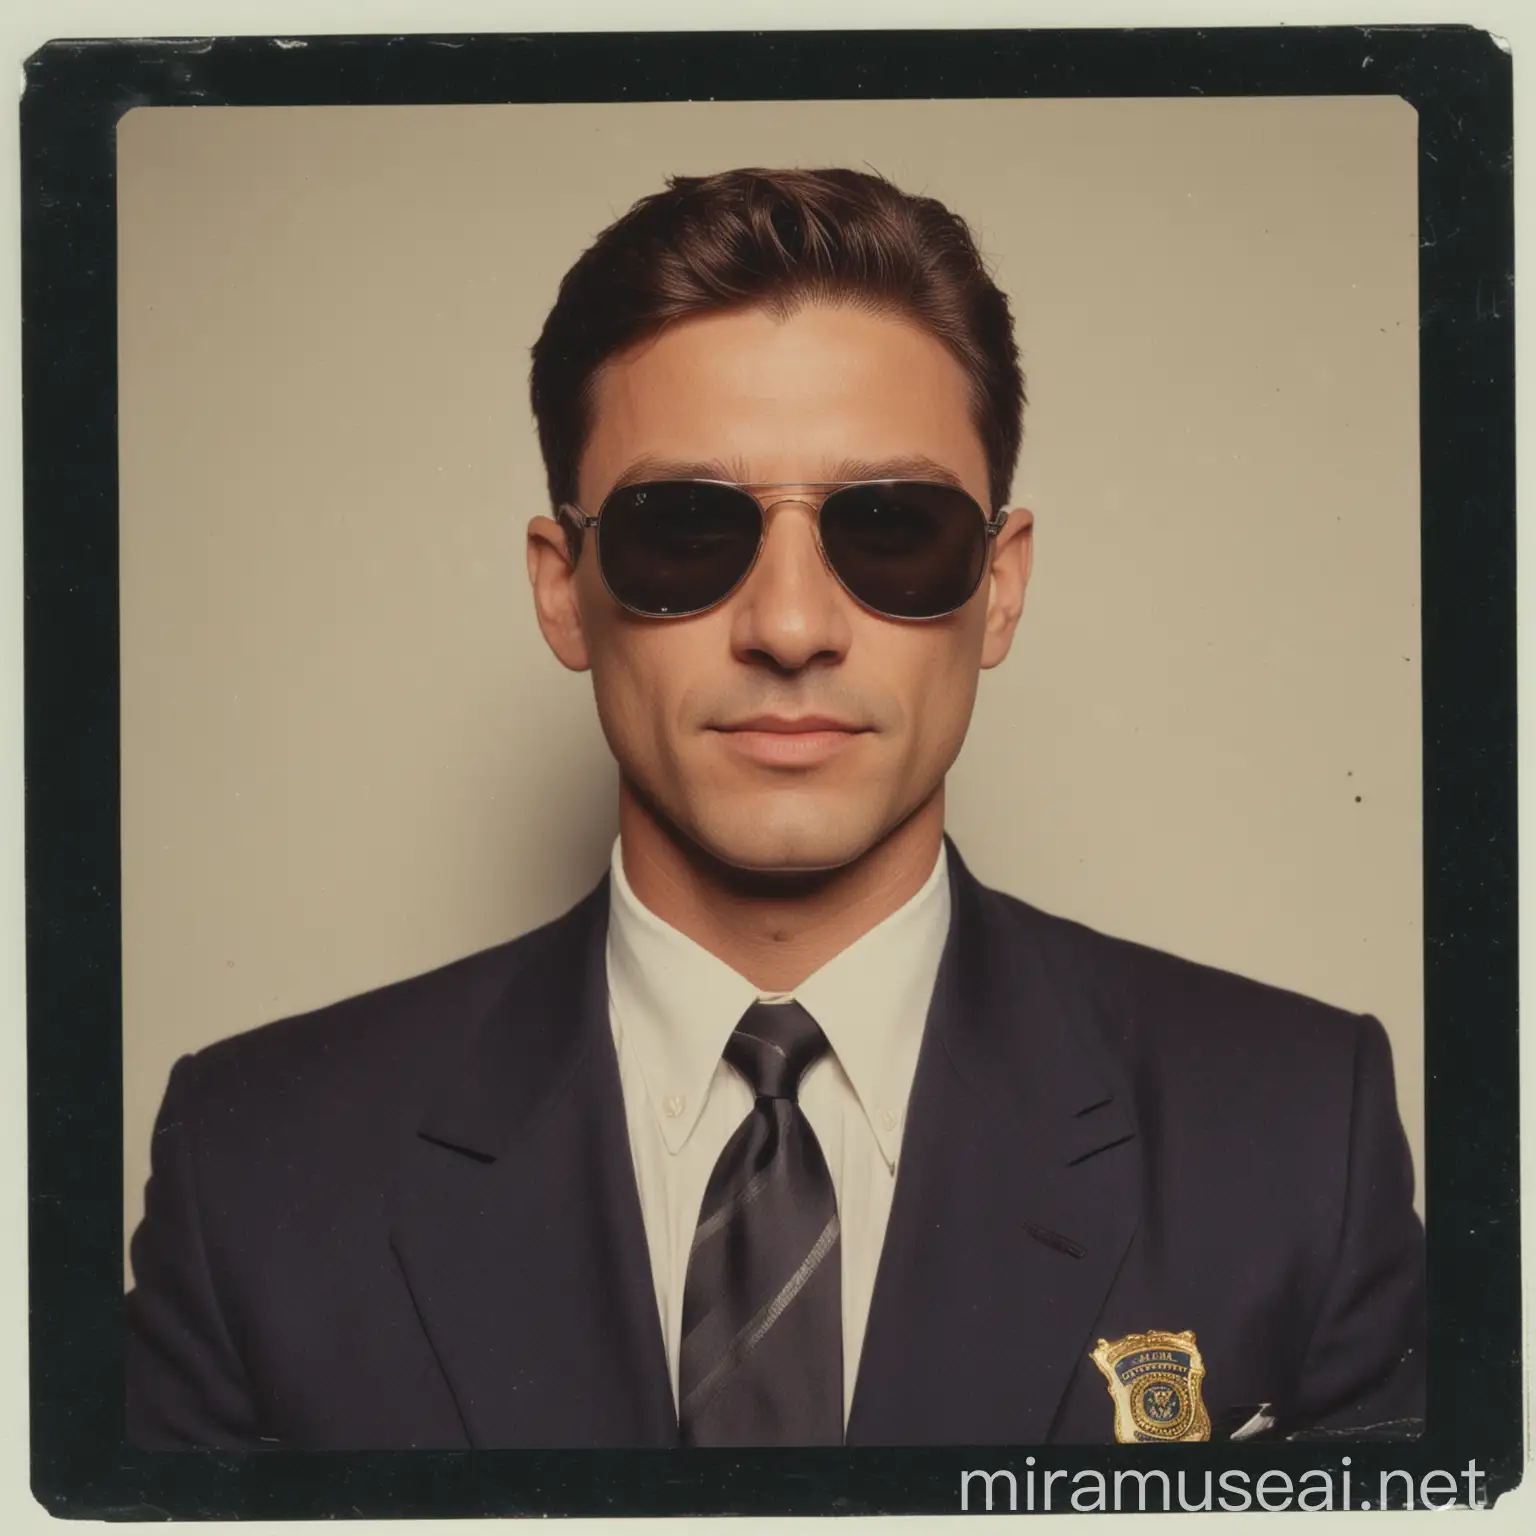 Cool FBI Agent Wearing Sunglasses in Polaroid Photo 1993